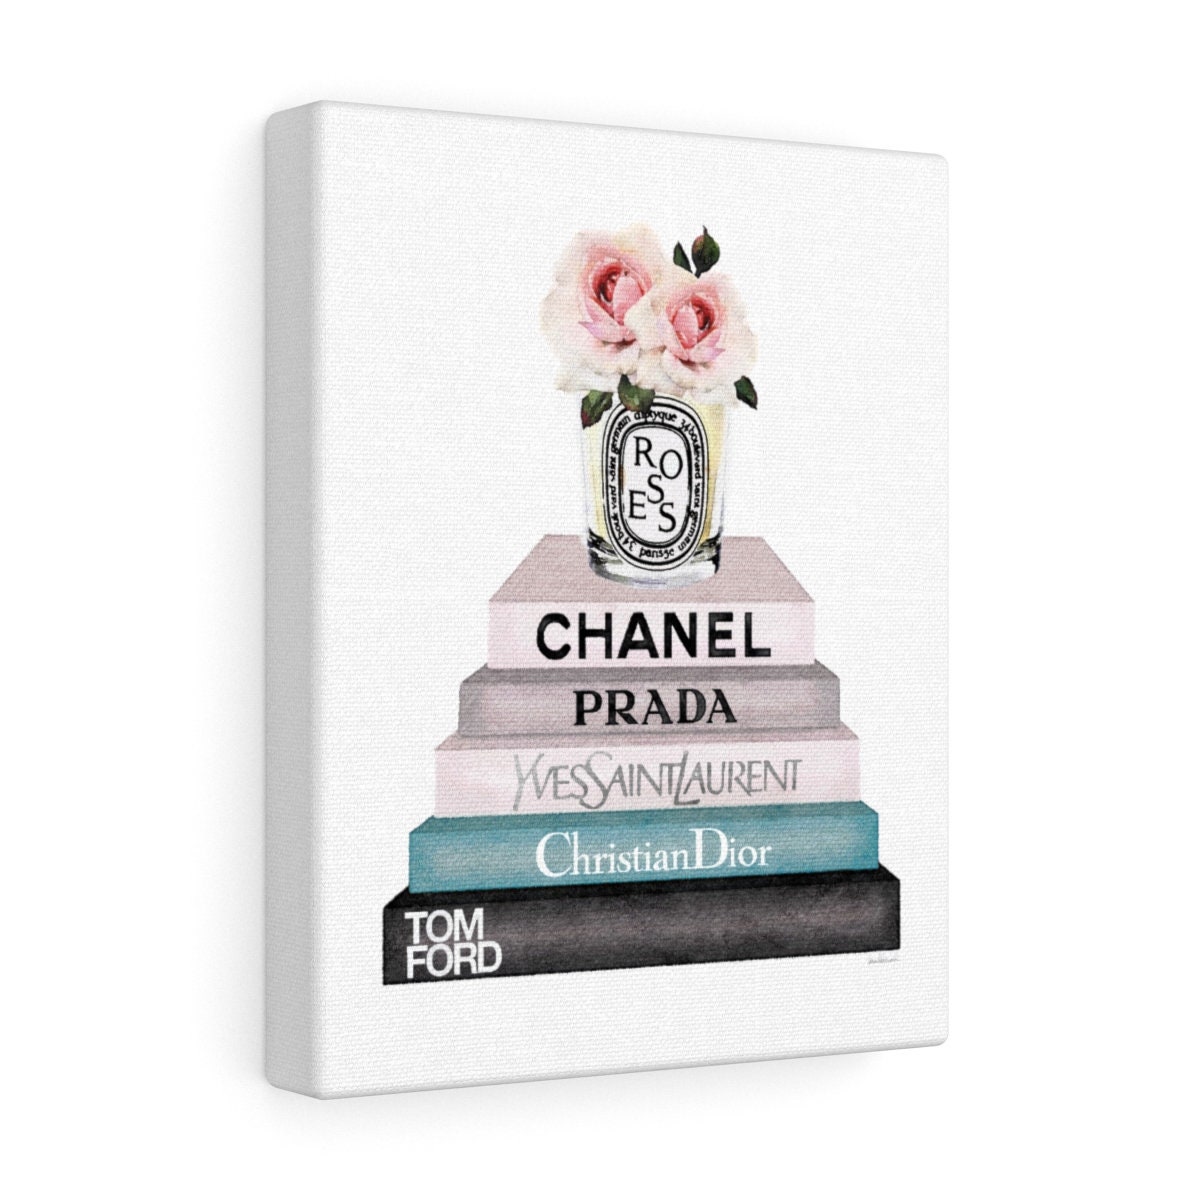 Candle Rose Grey Blush Teal Book Books Fashion books | Etsy